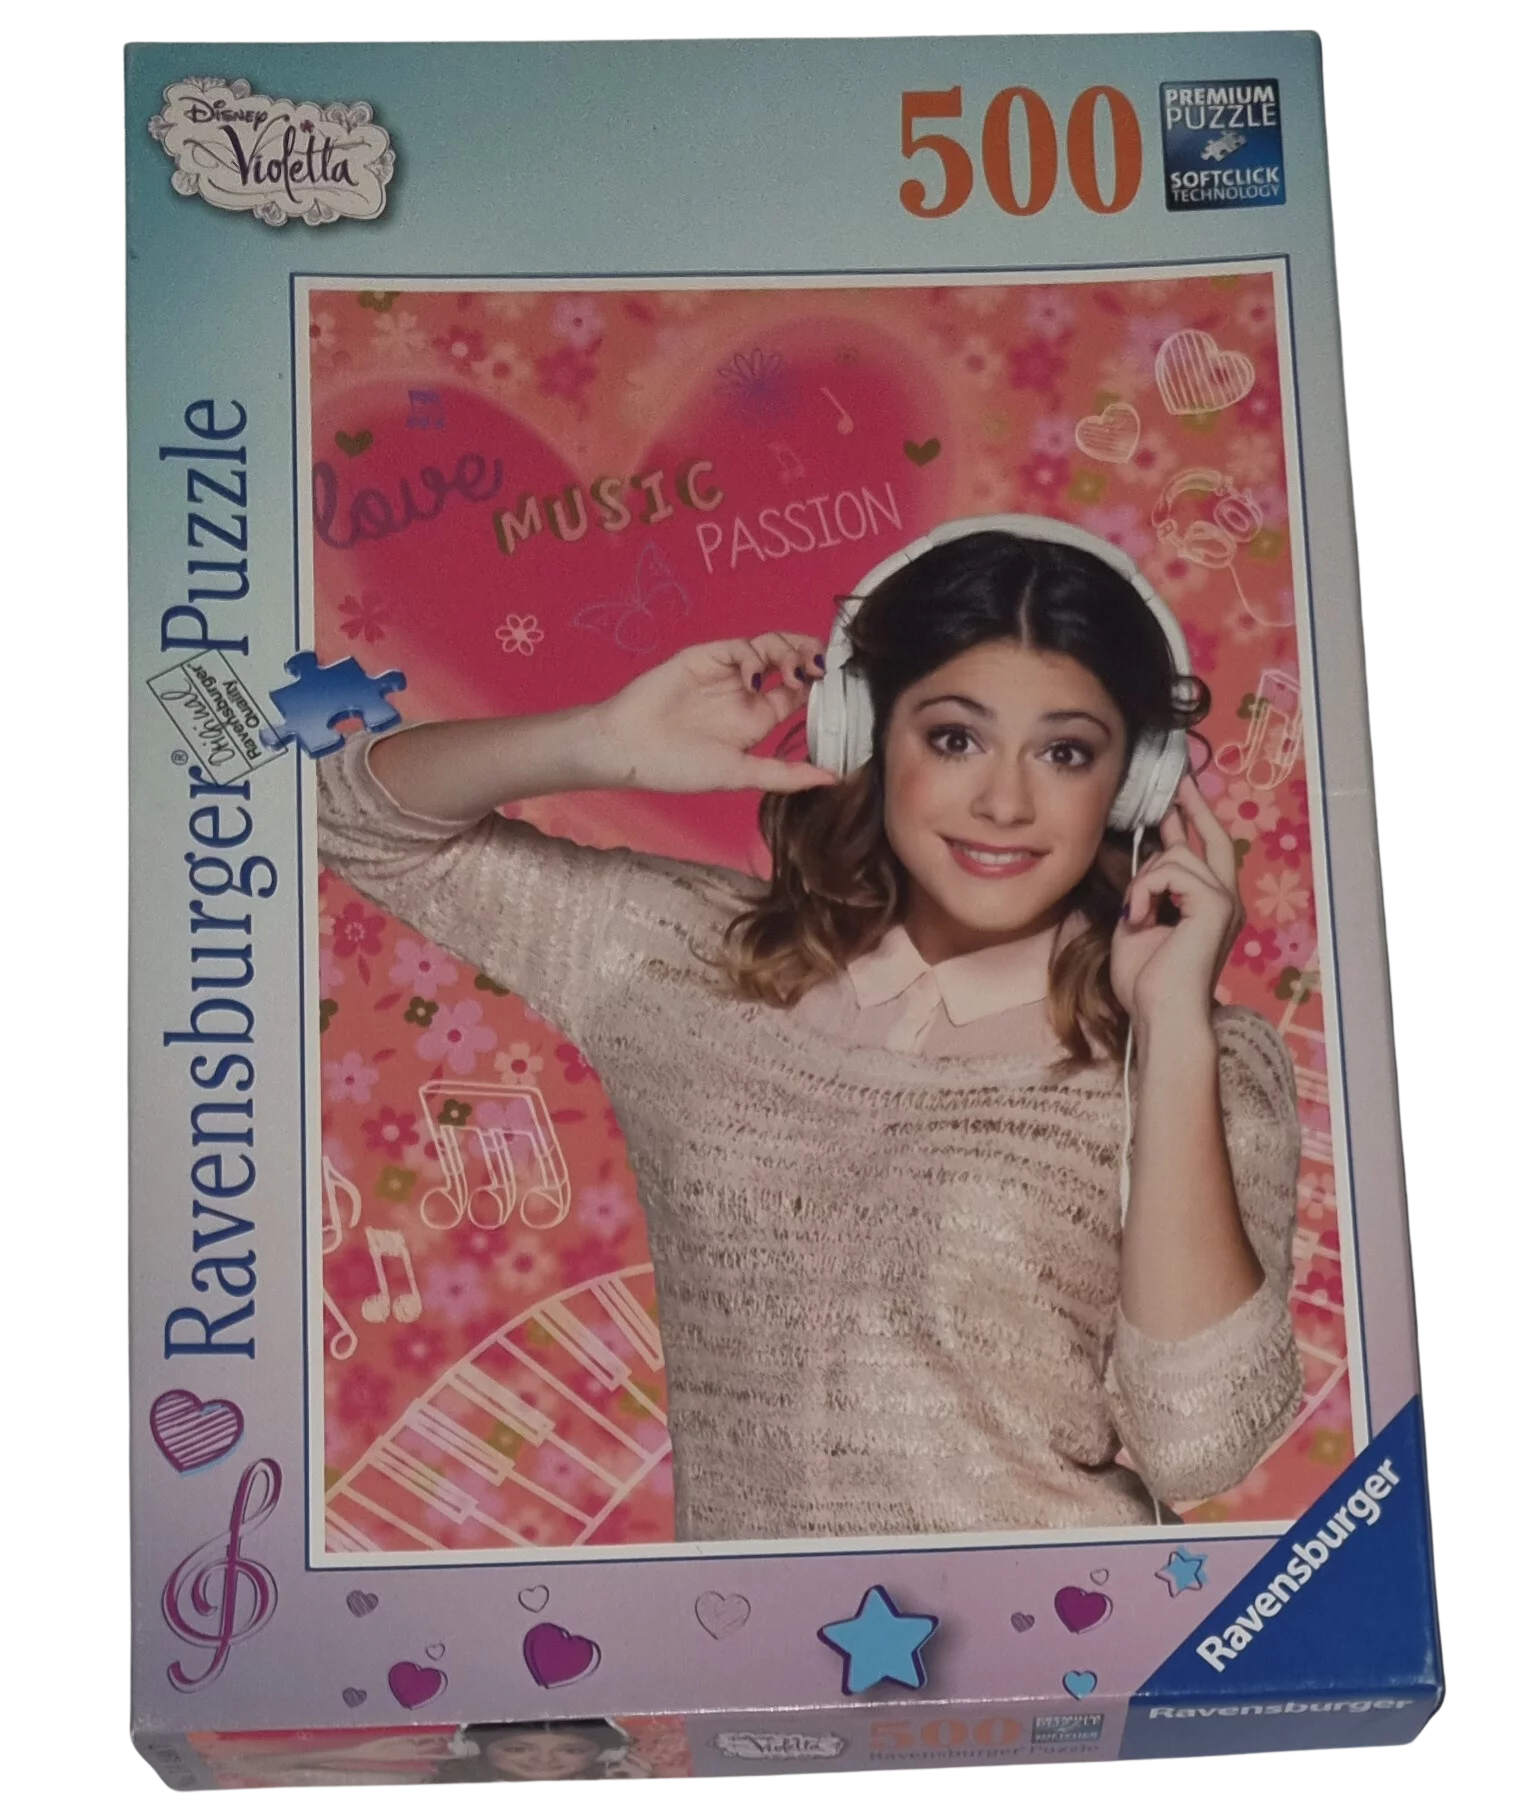 Ravensburger Premium Puzzle softclick 500 Teile Disney Violetta, Violetta liebt Musik